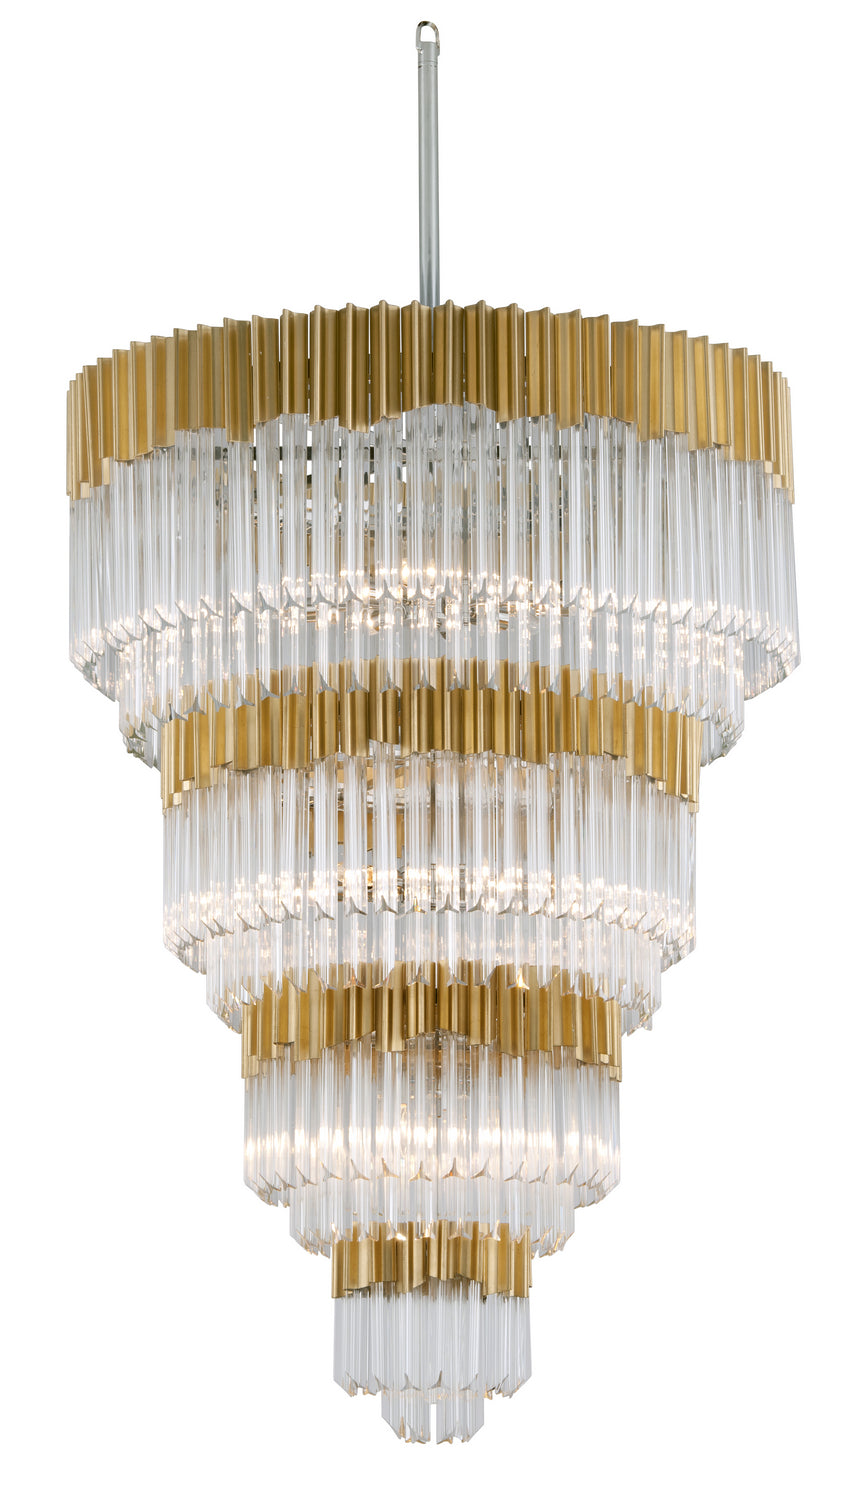 Corbett Lighting - 17 Light Chandelier - Charisma - Gold Leaf W Polished Stainless- Union Lighting Luminaires Decor